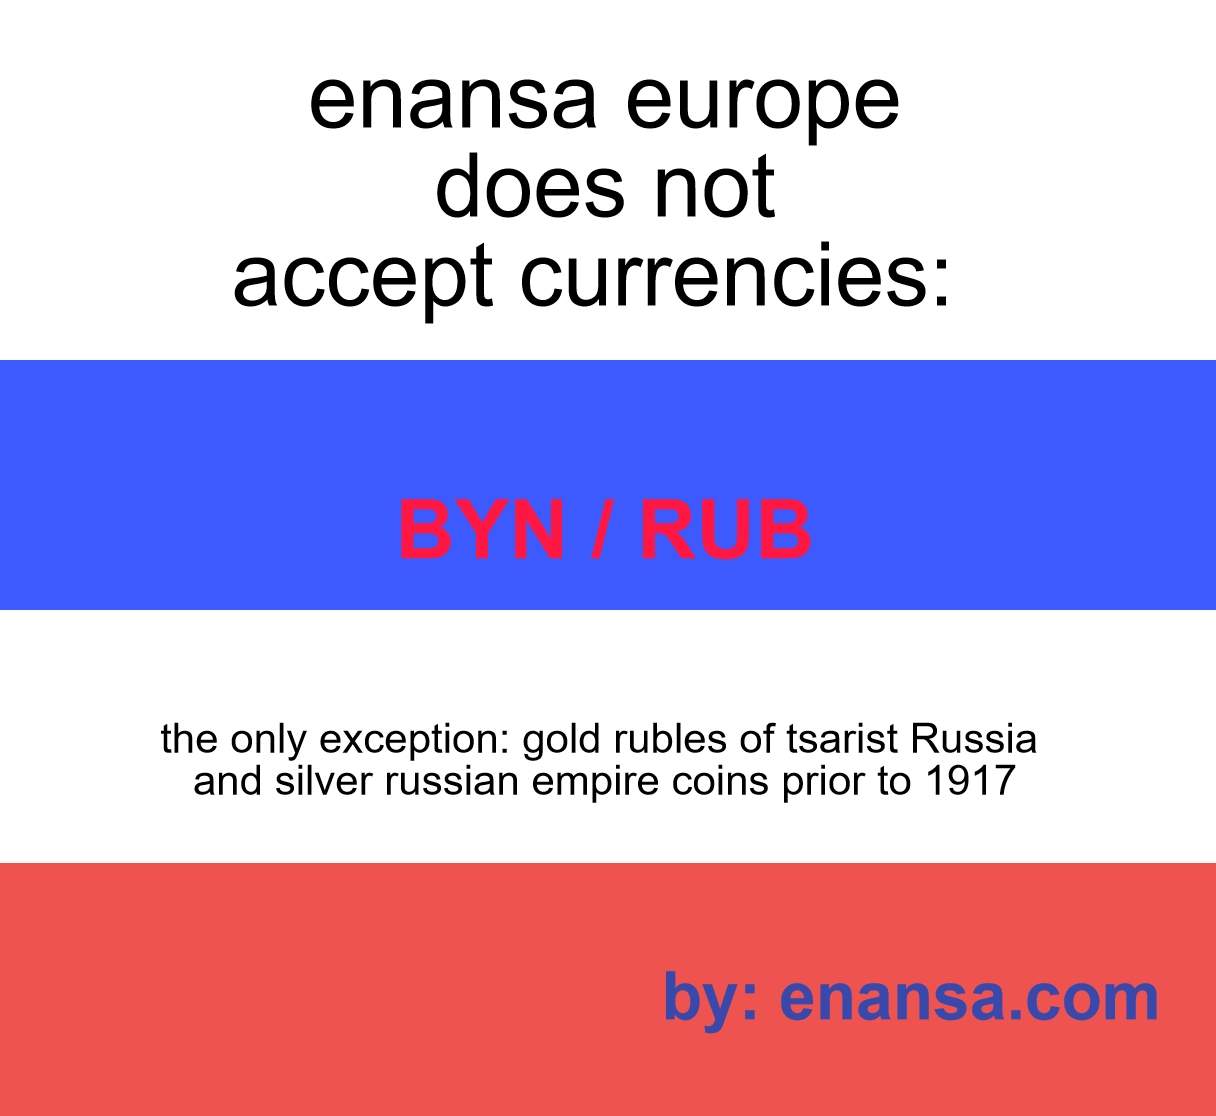 we don't accept rubles